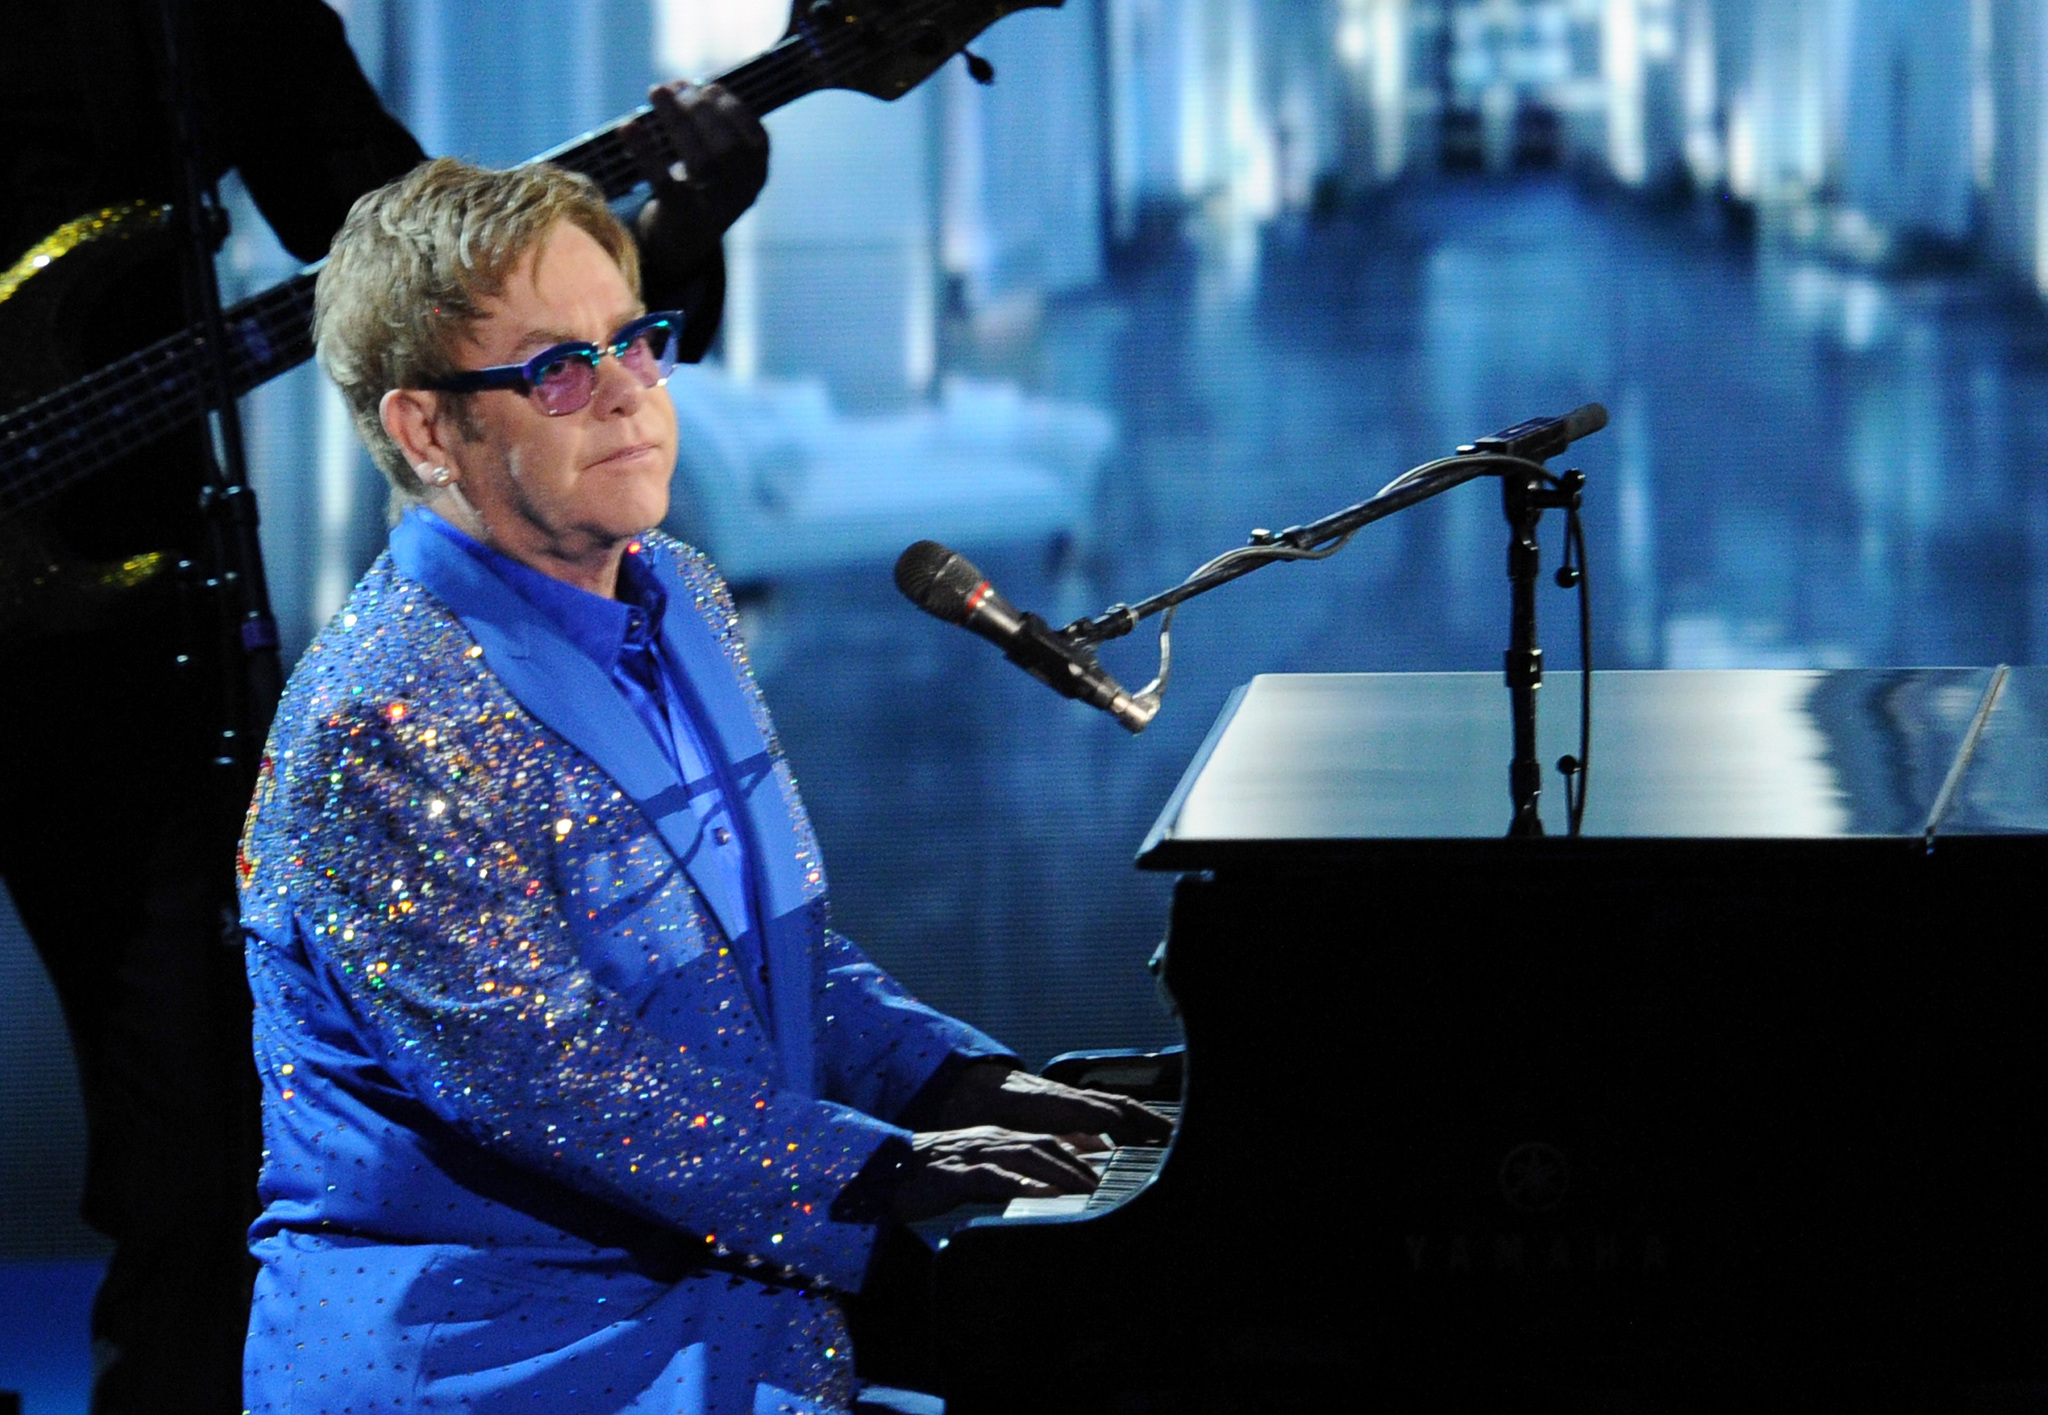 Elton John at event of The 65th Primetime Emmy Awards (2013)